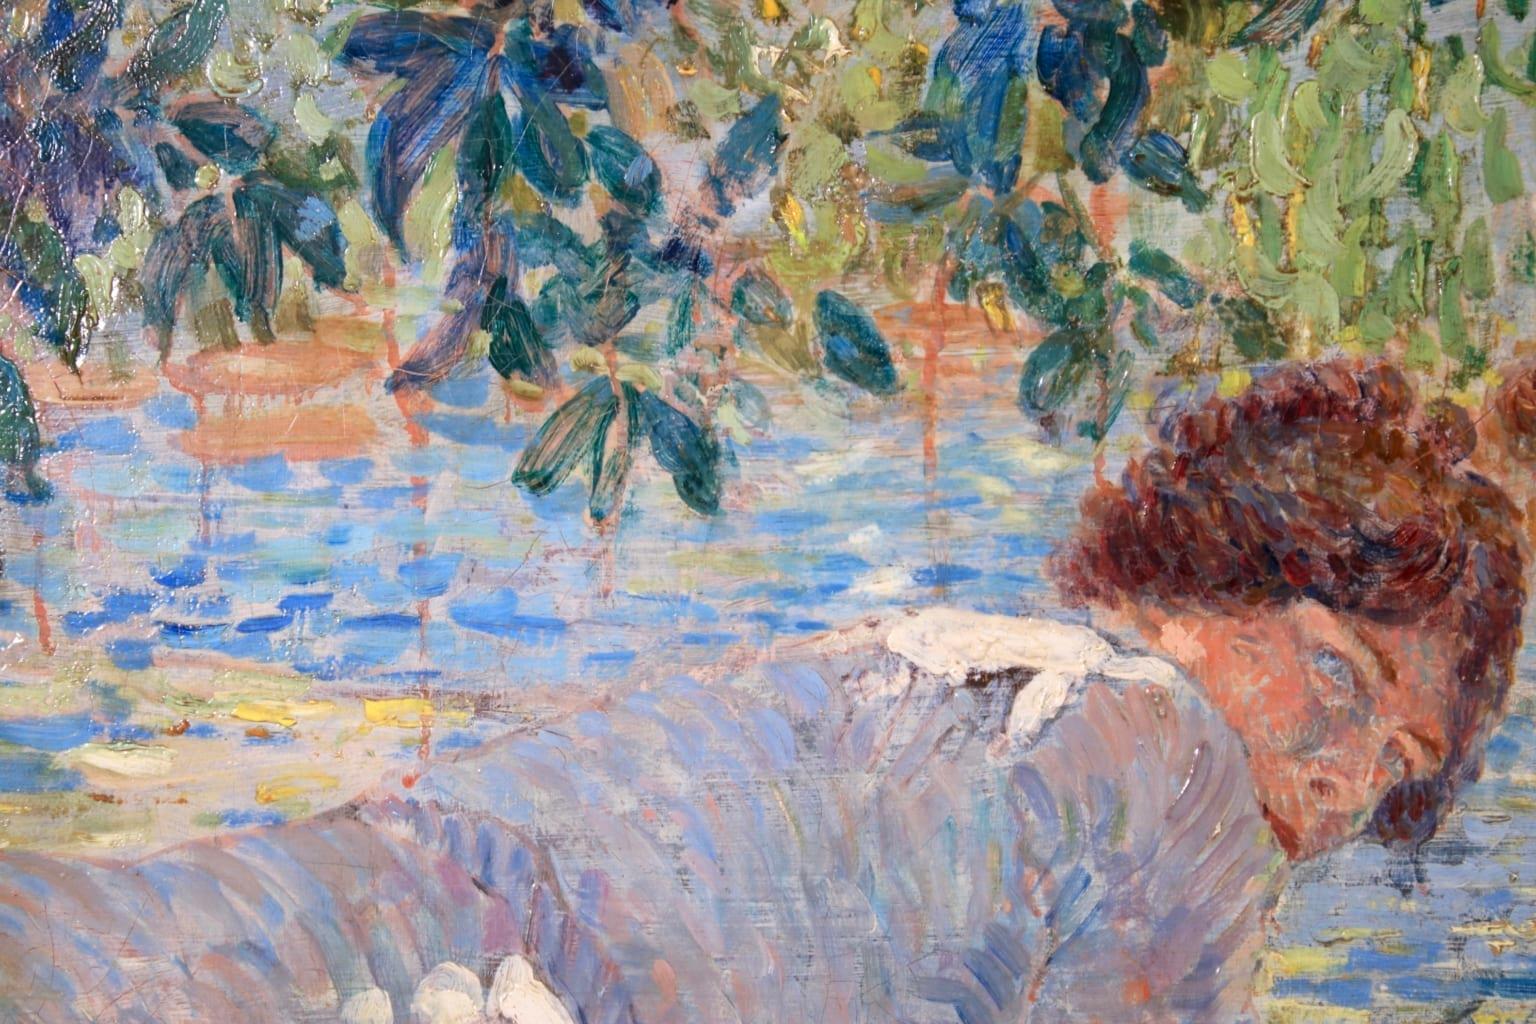 Lavandieres - Impressionist Oil, Women by River in Landscape by Paul Villiers - Gray Figurative Painting by Paul Edmond Villiers